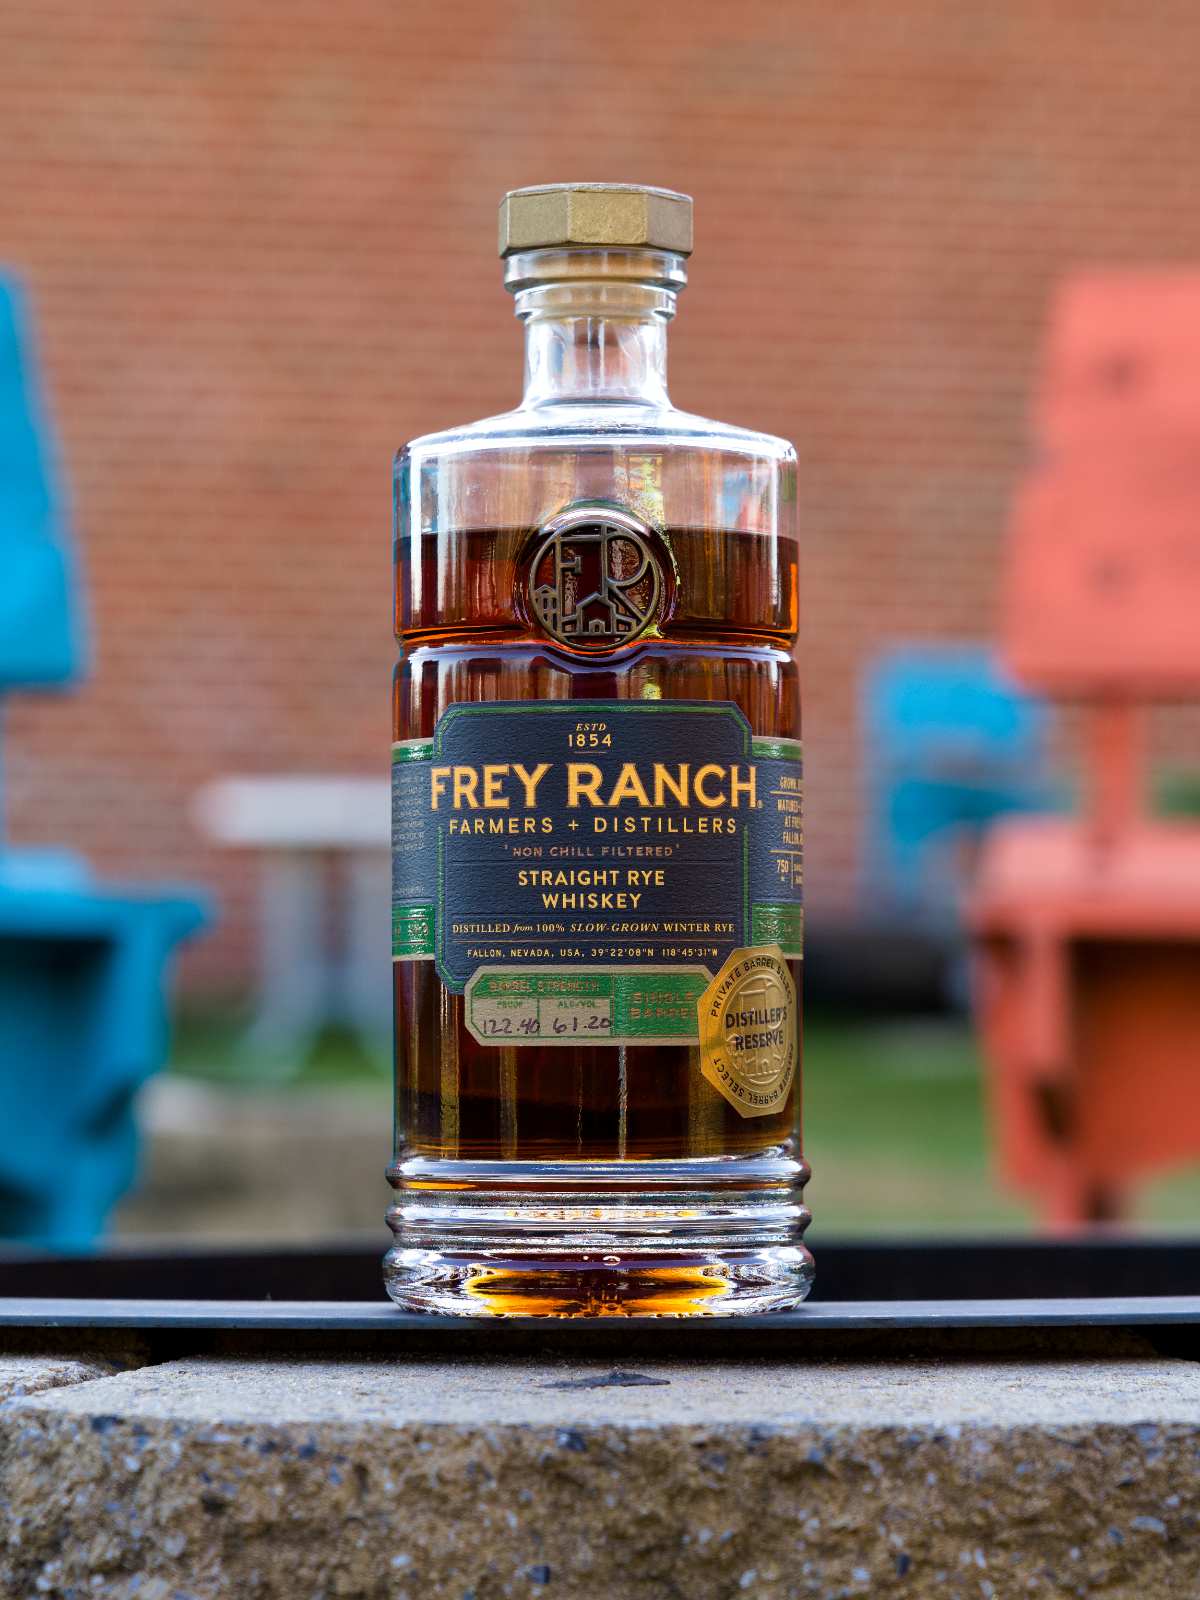 Frey Ranch Barrel Strength Rye featured